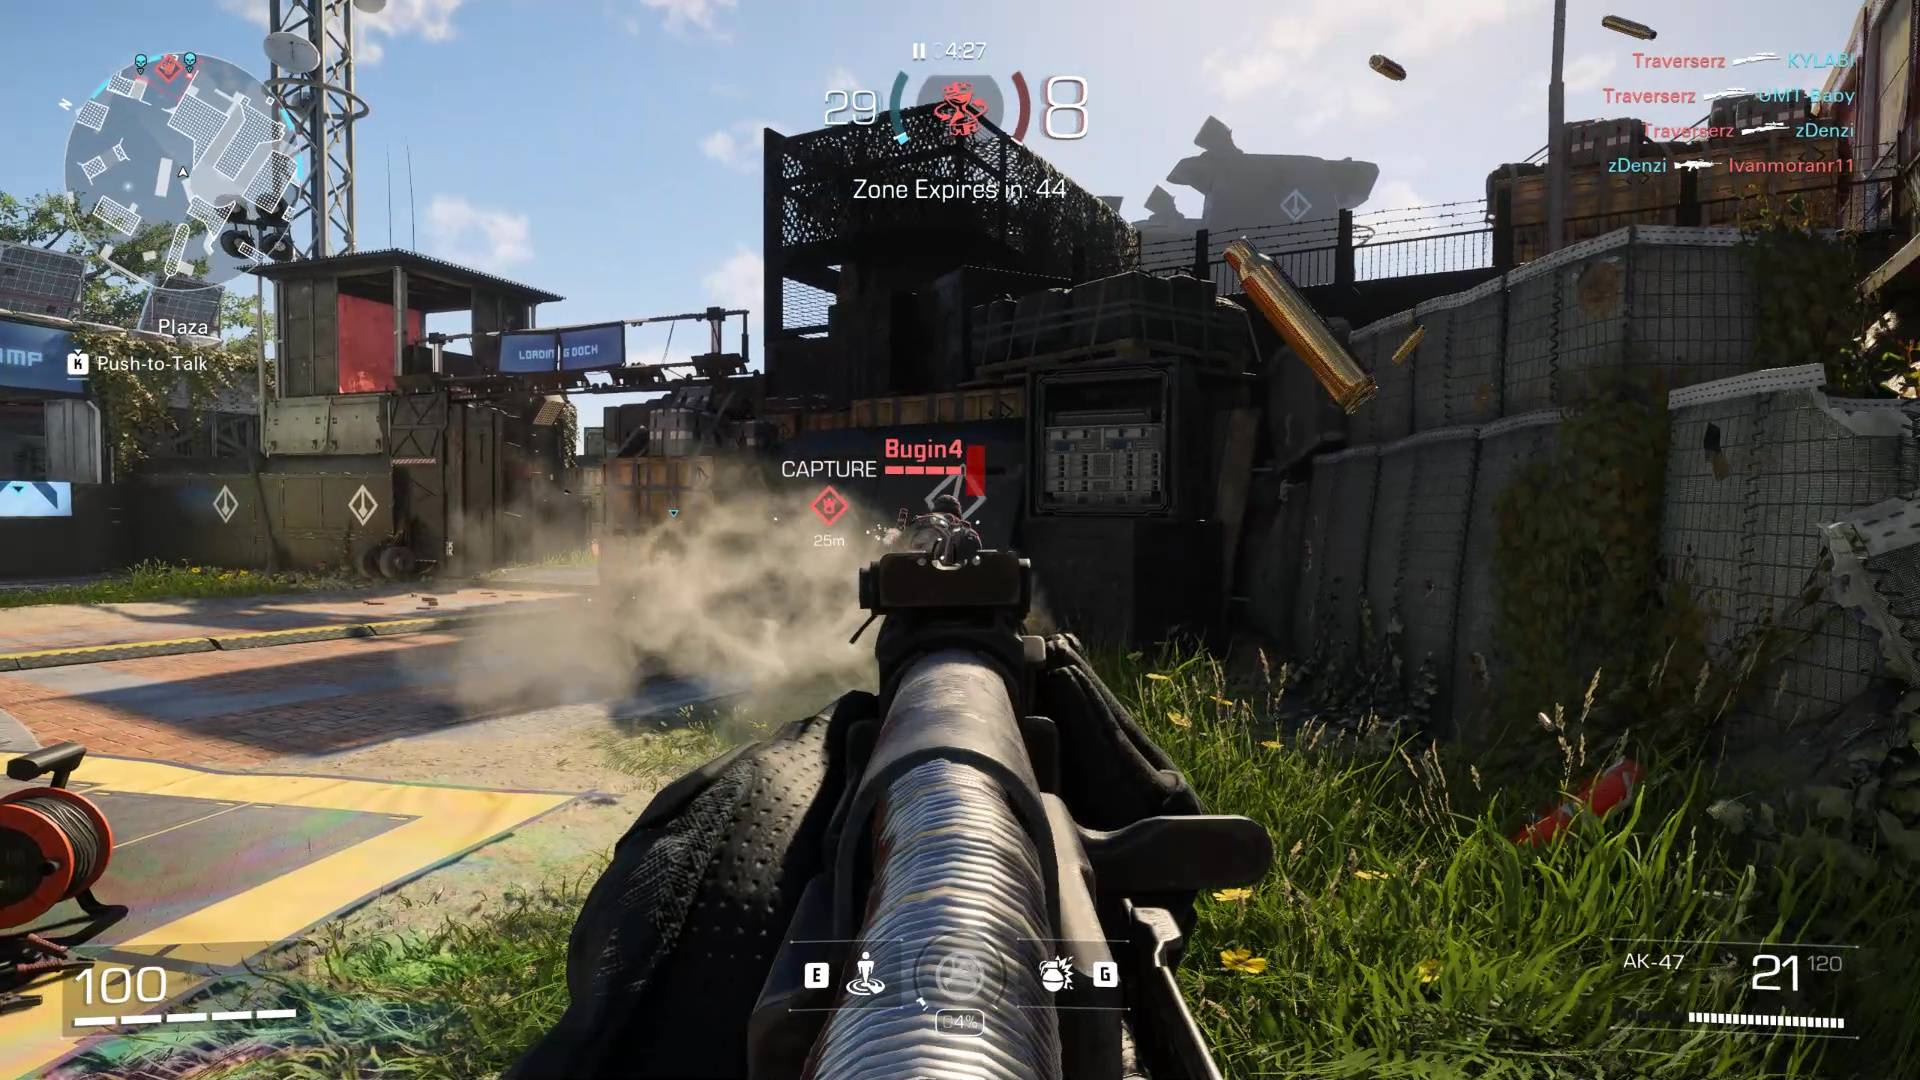 Capture d'écran de gameplay de XDefiant montrant une fusillade